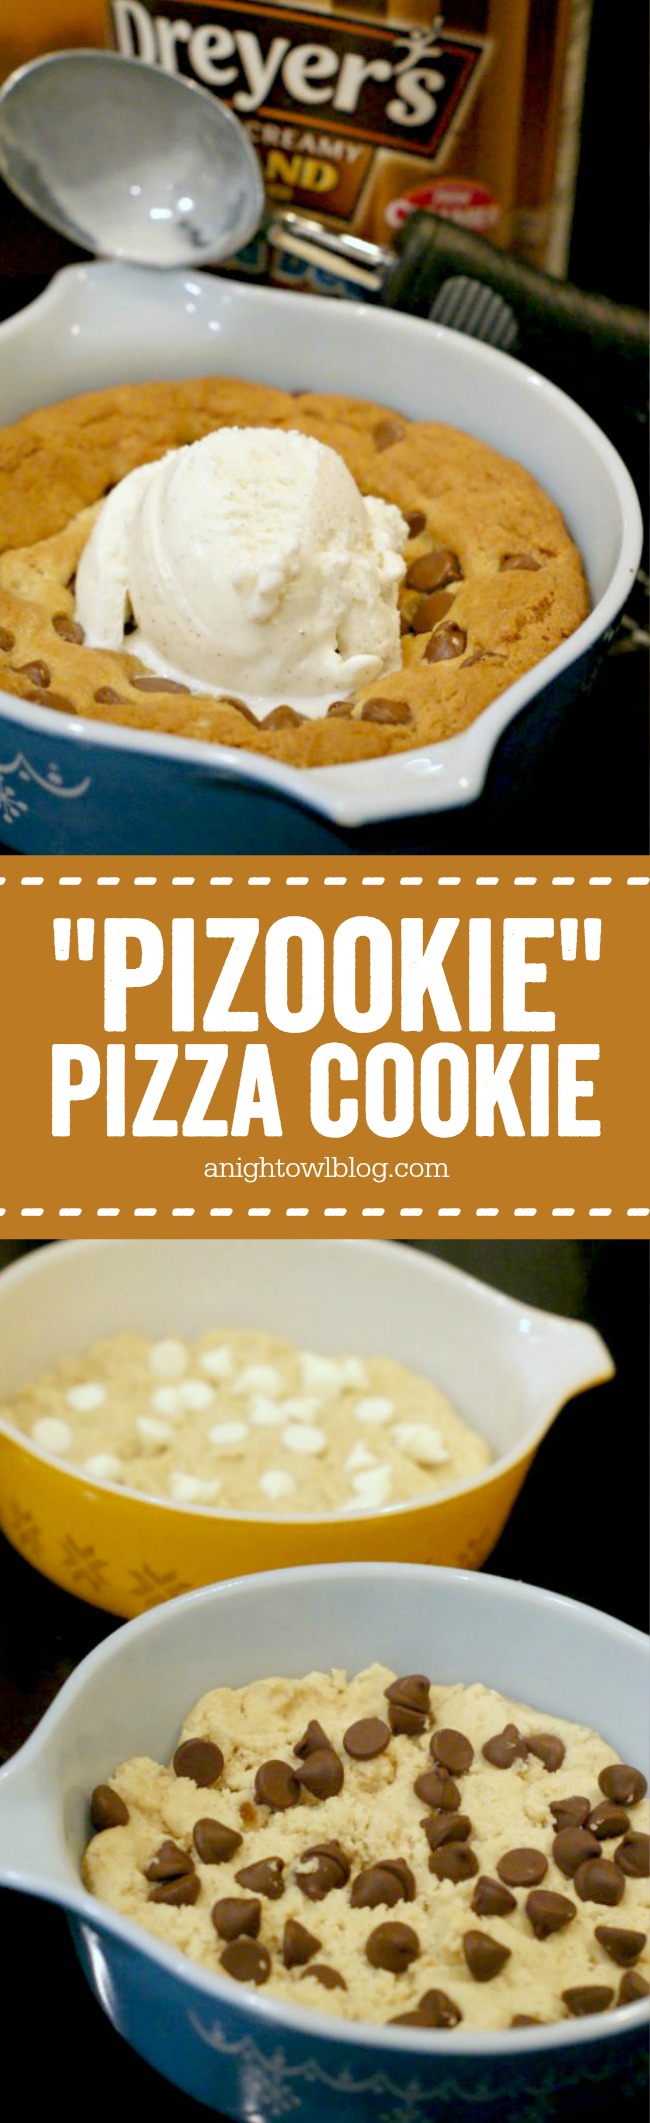 https://www.anightowlblog.com/wp-content/uploads/2013/01/Pizookie-Pizza-Cookie-PIN.jpg